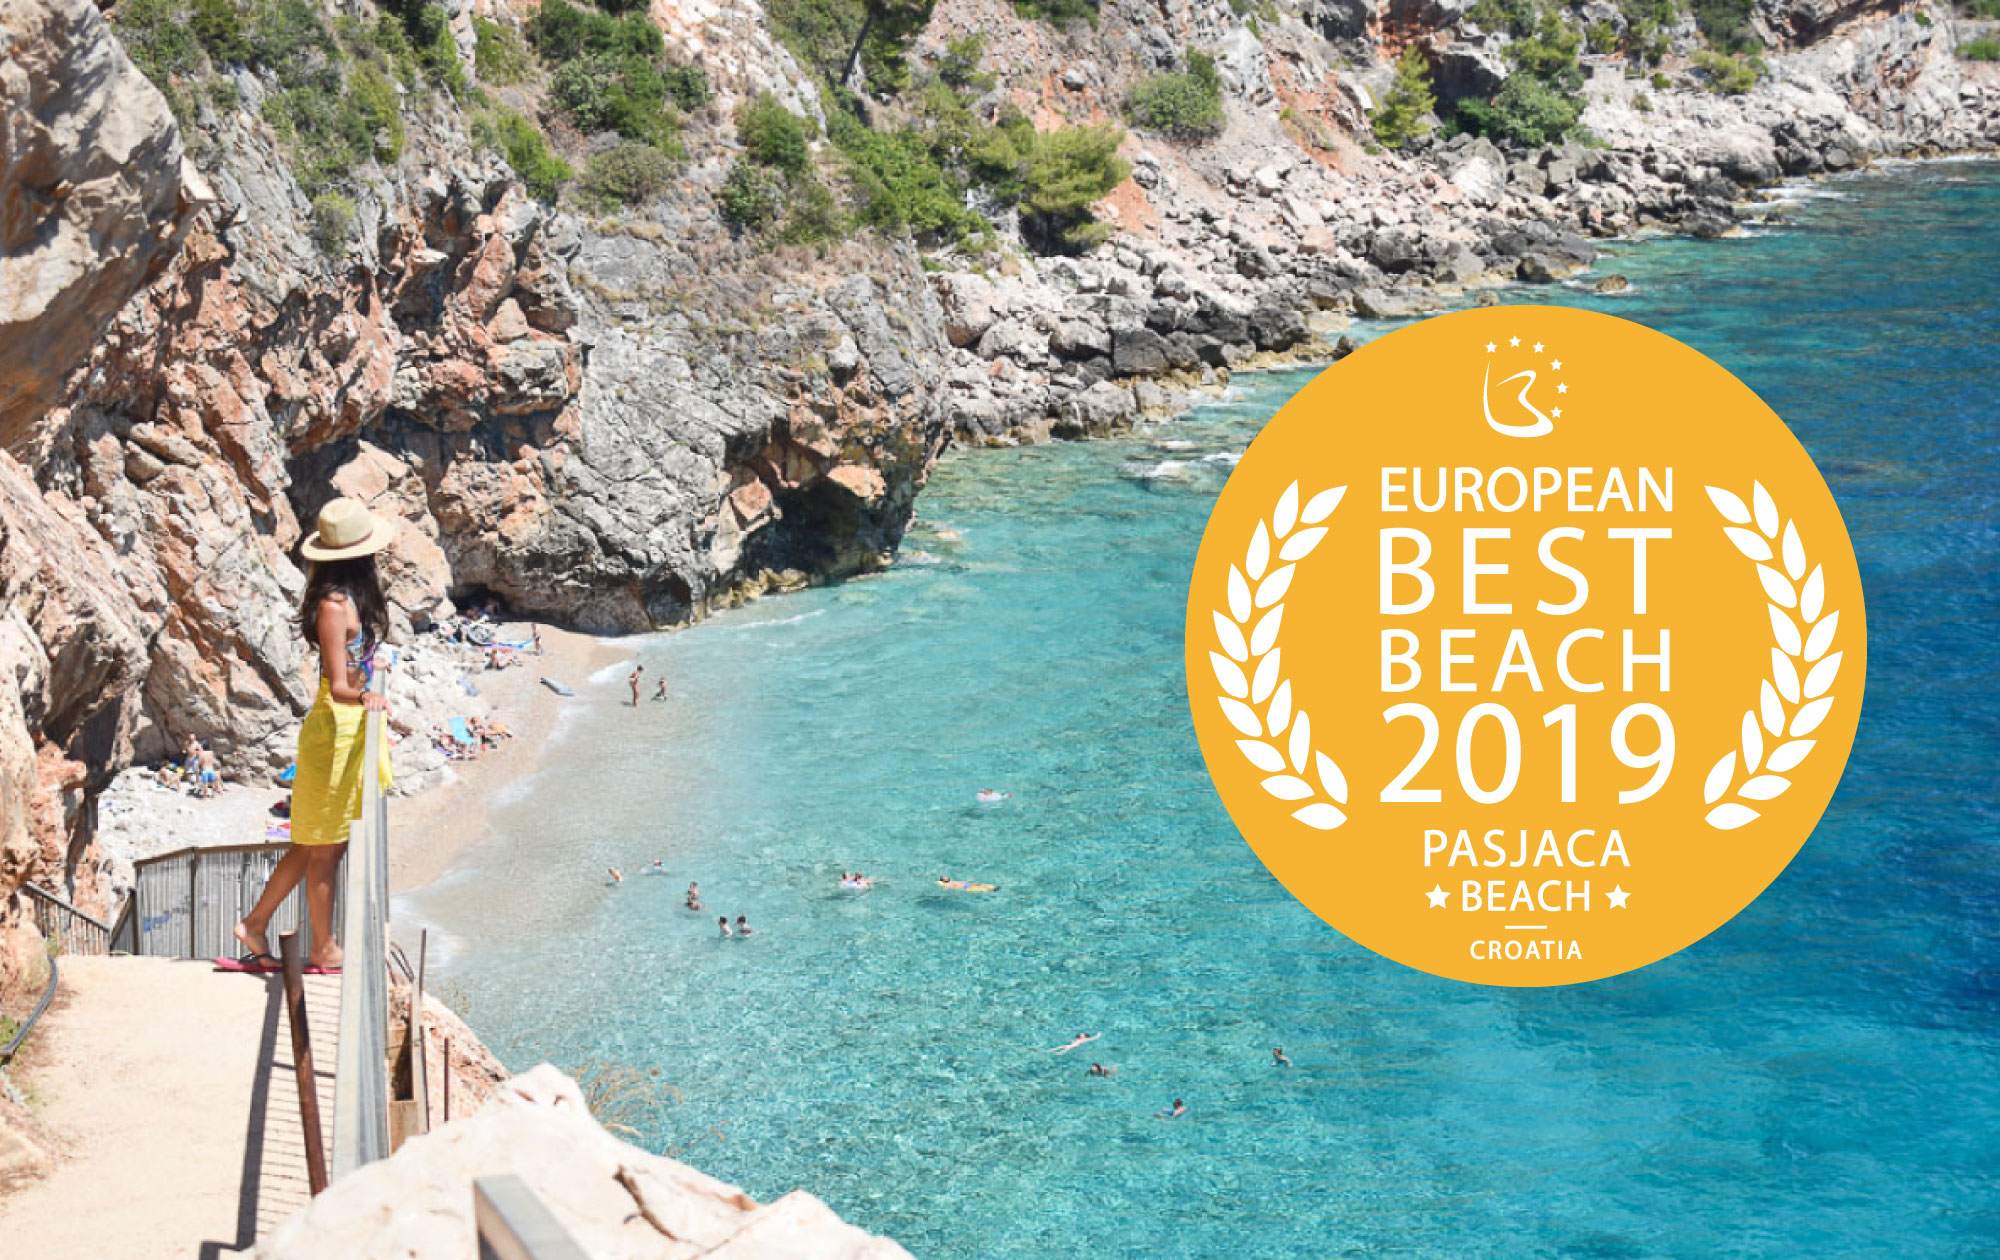 Best beaches in Europe 11 - Europe